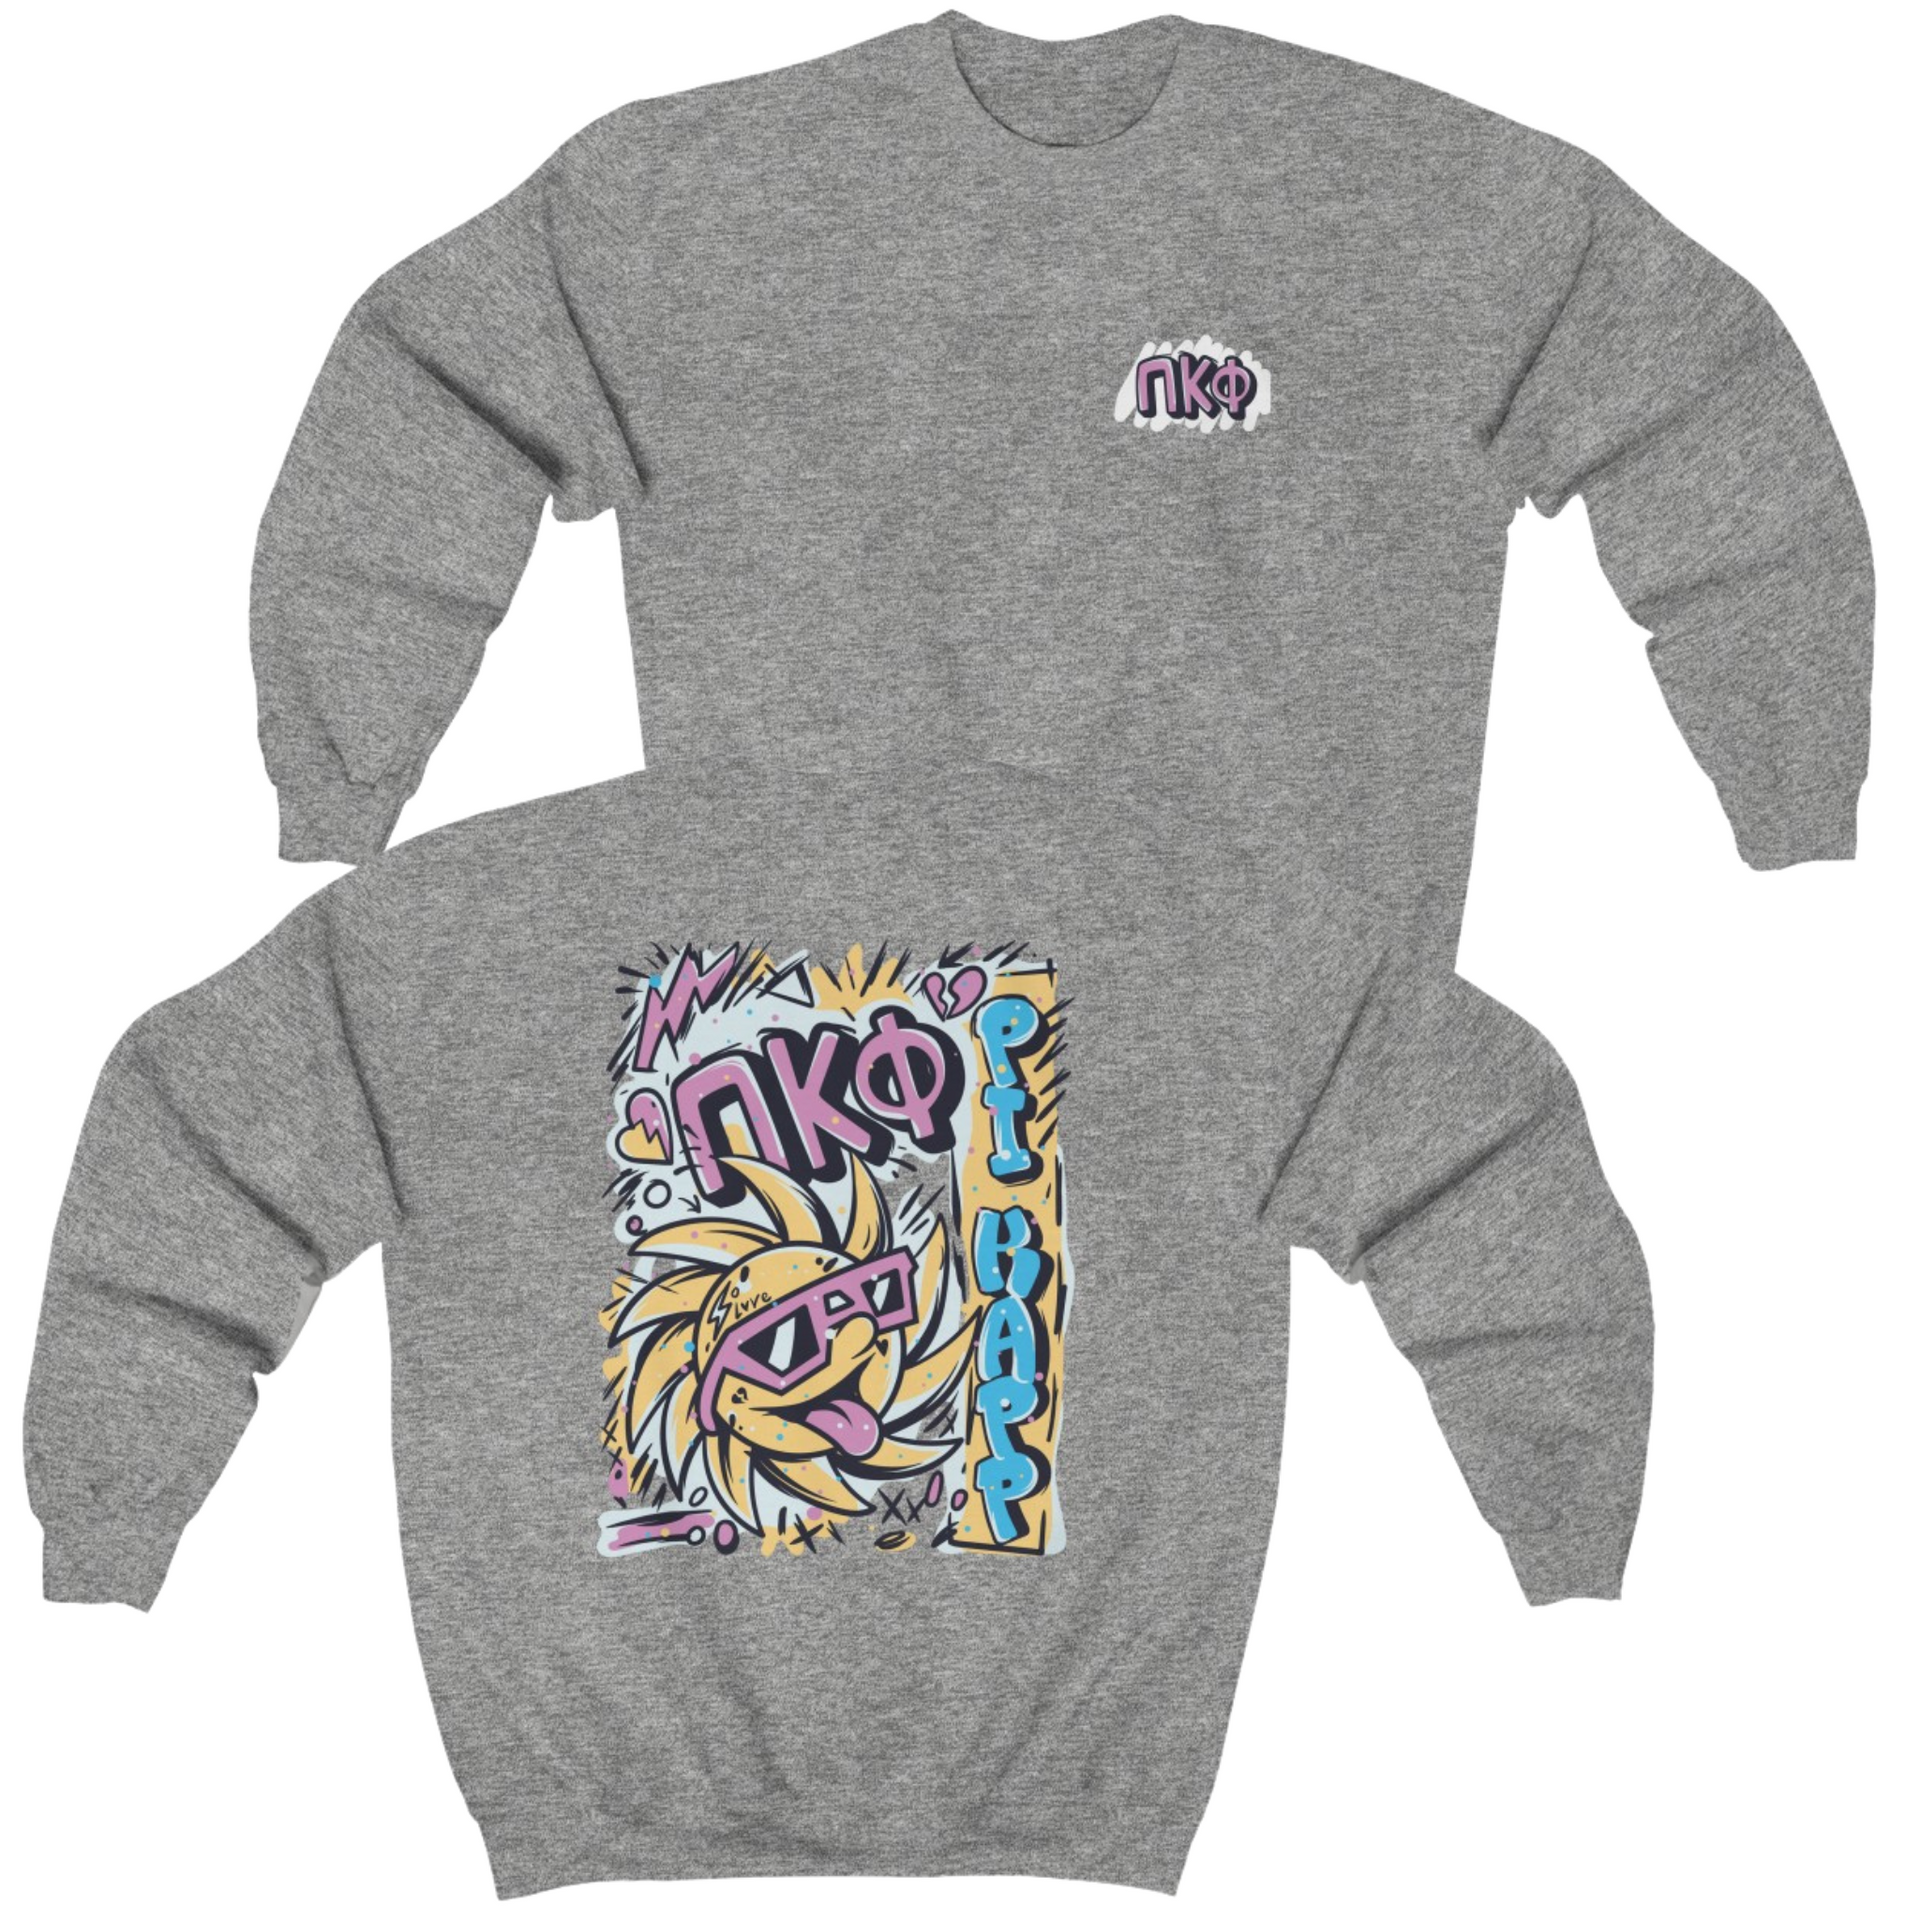 Grey Pi Kappa Phi Graphic Crewneck Sweatshirt | Fun in the Sun | Pi Kappa Phi Apparel and Merchandise 